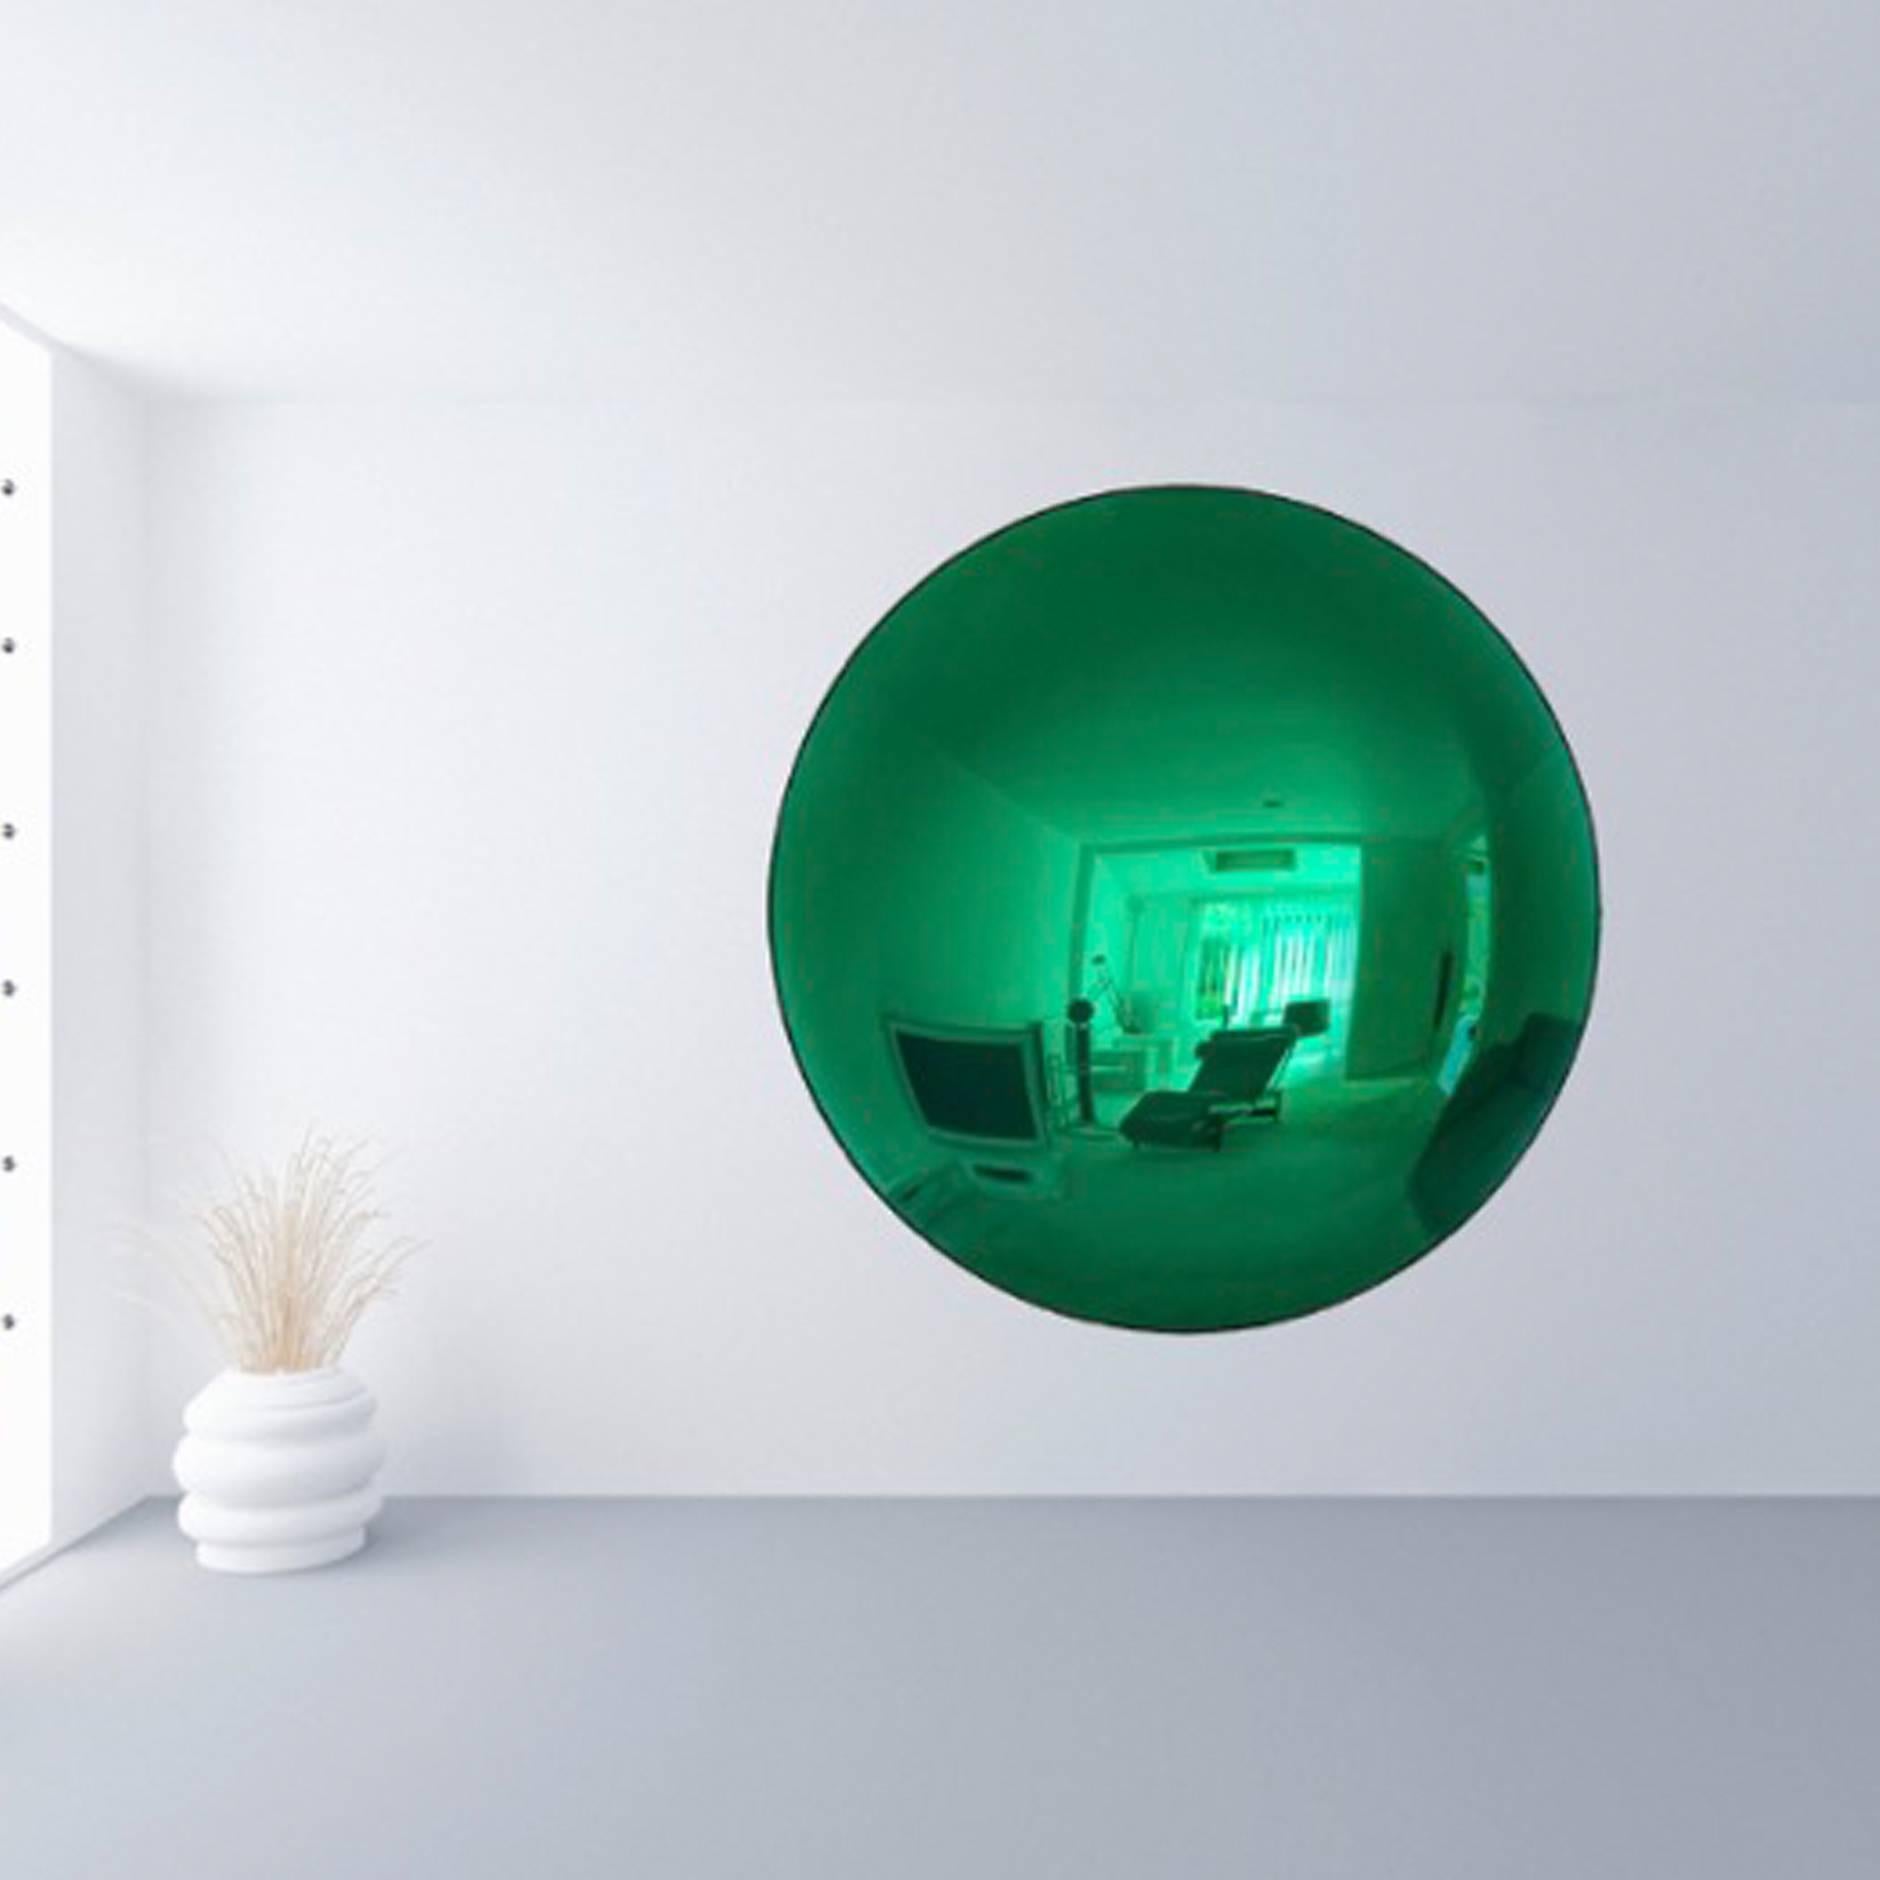 Grande-Bretagne (UK) Grand miroir vert convexe en vente